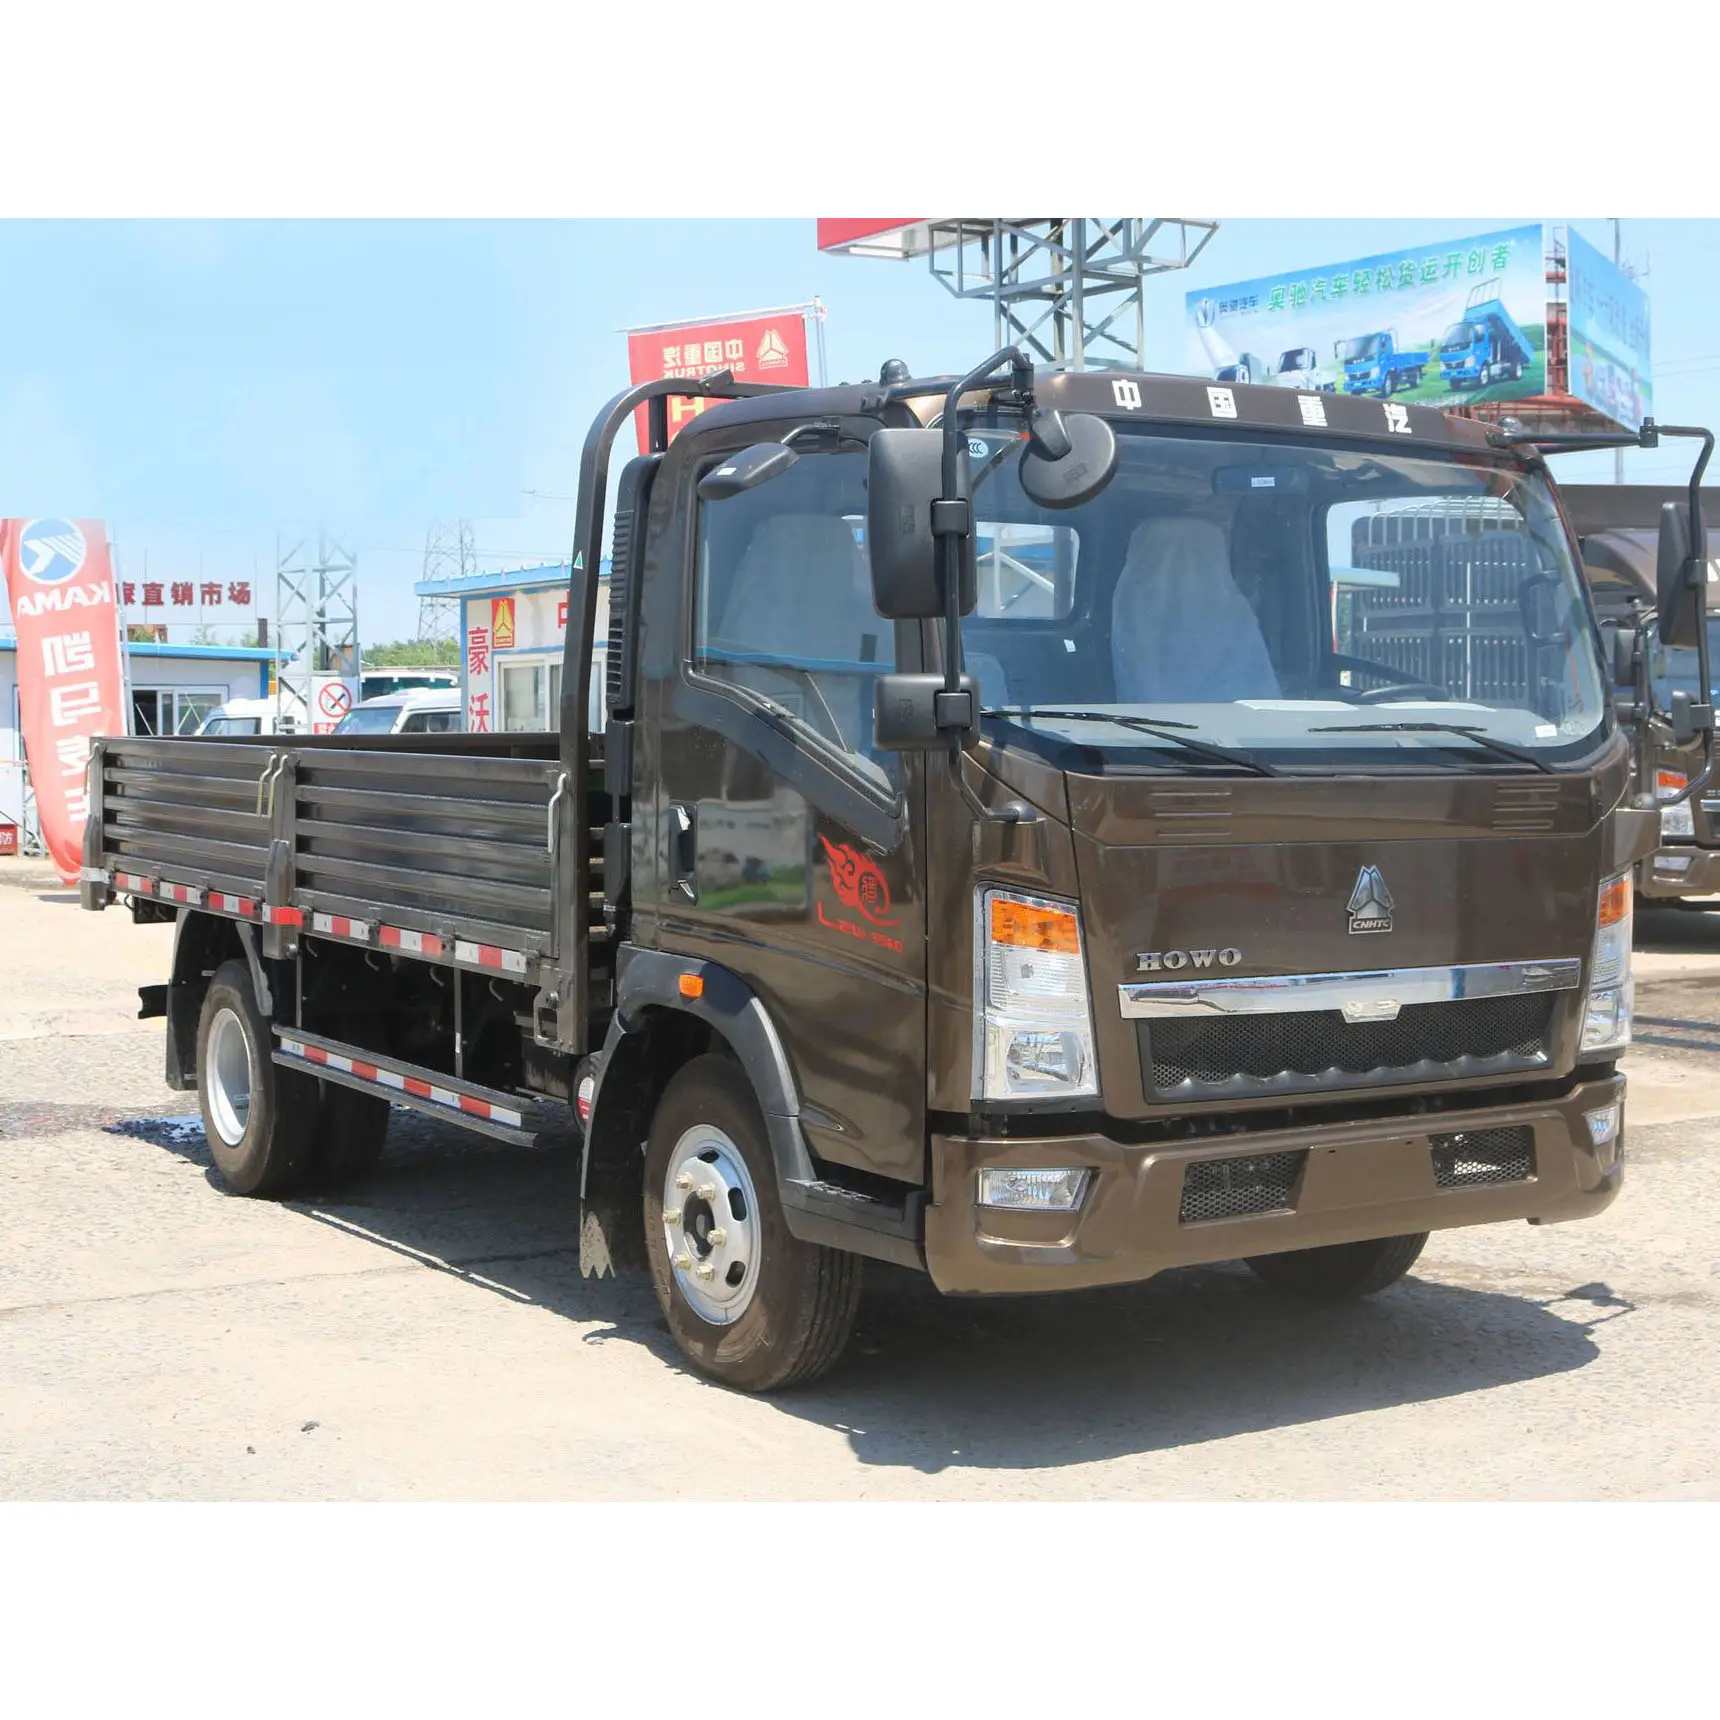 Çin 6 tekerlekli mini van kamyon 4x2 forland hafif kamyon